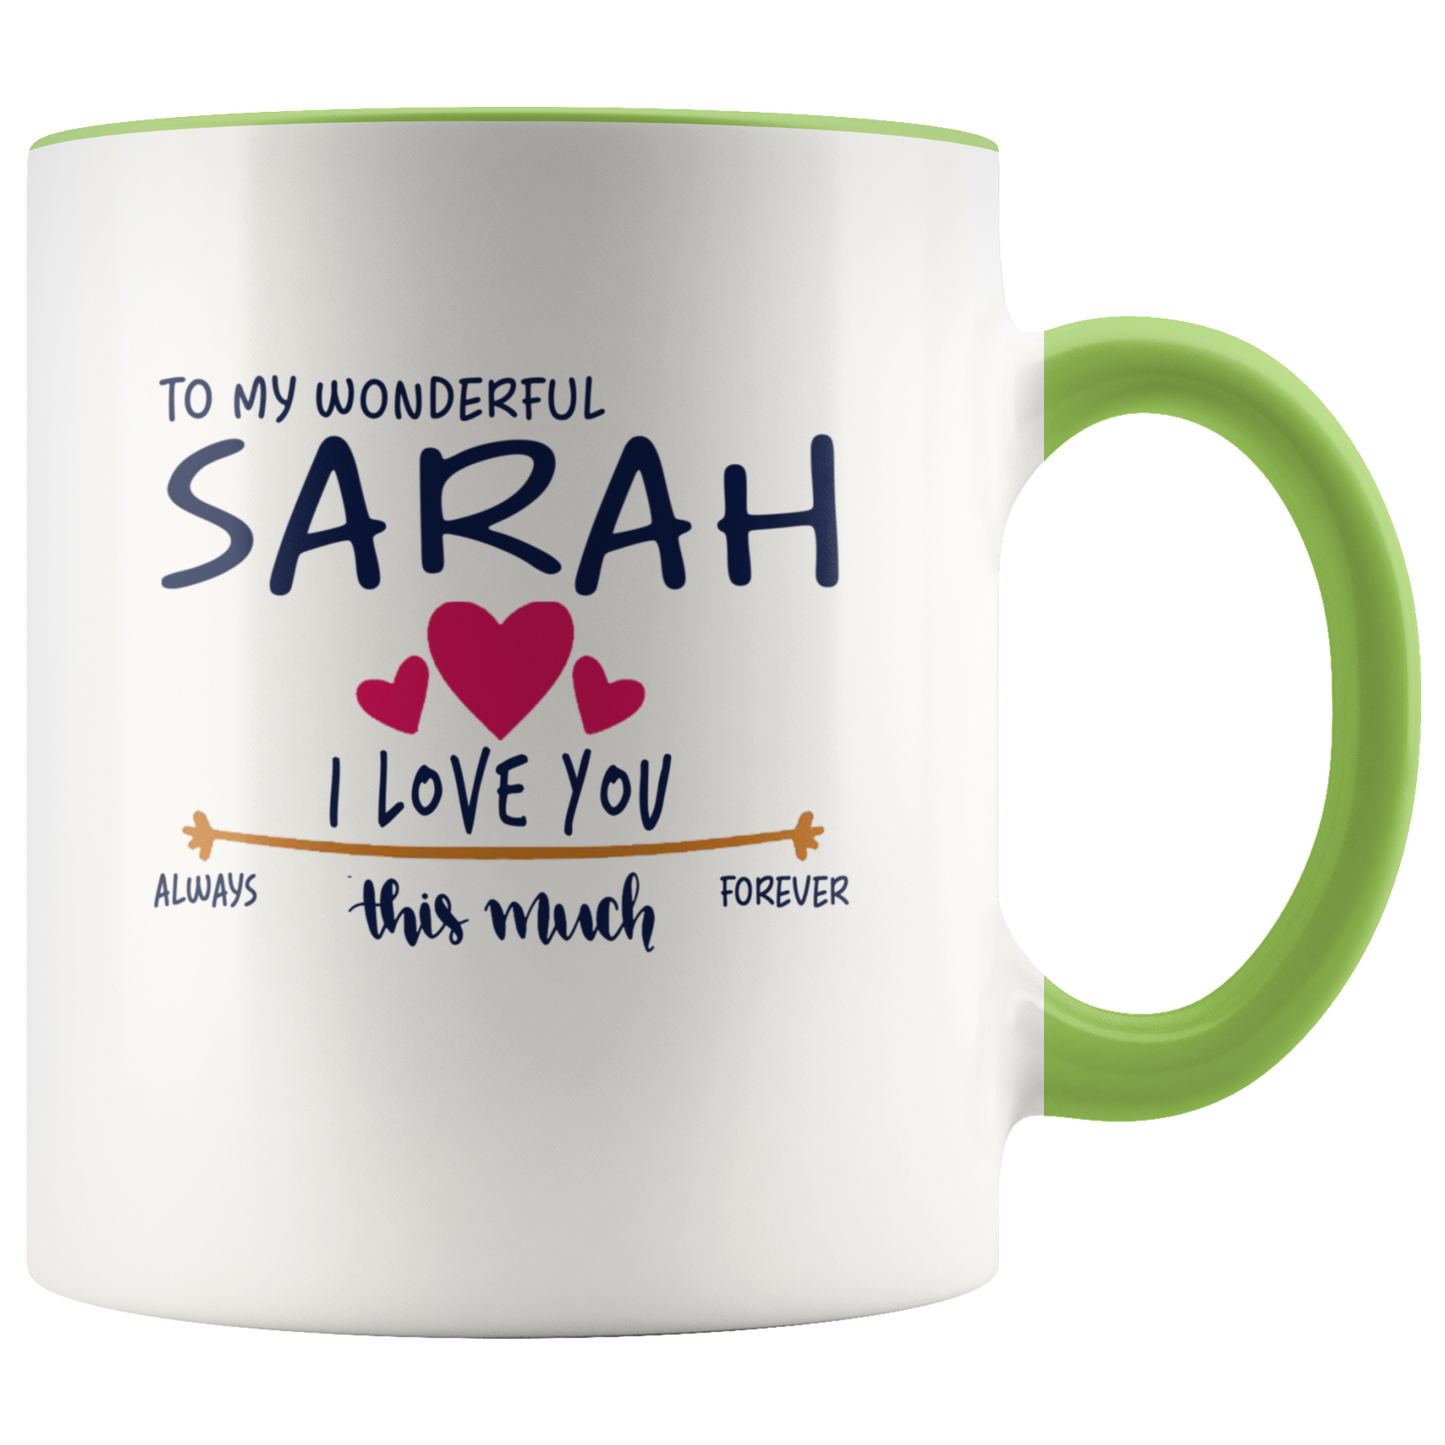 M-21258935-sp-22836 - Valentines Day Coffee Mug With Name Sarah - To My Wonderful